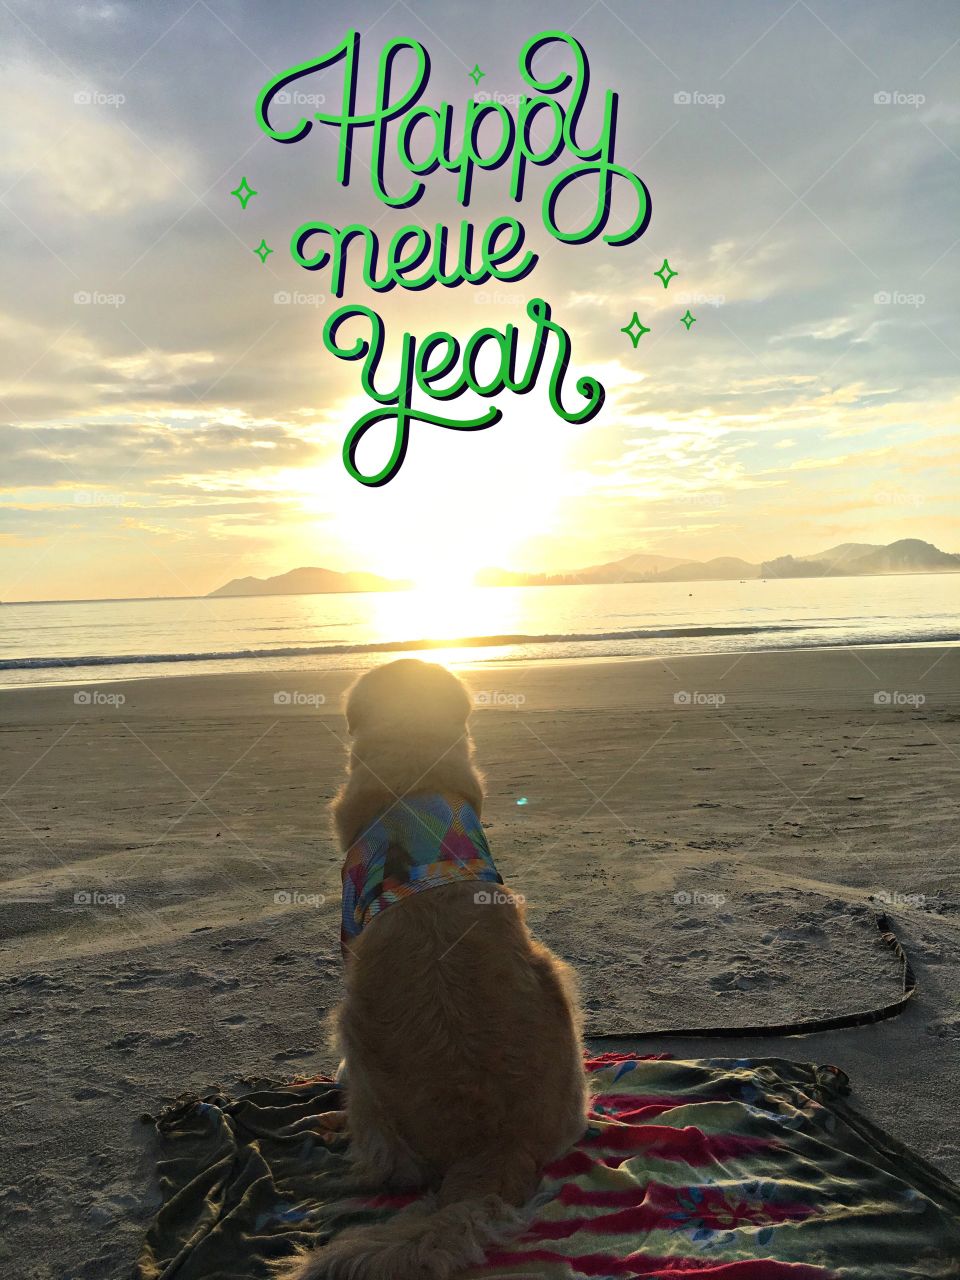 Happy new year
Dog
Sea